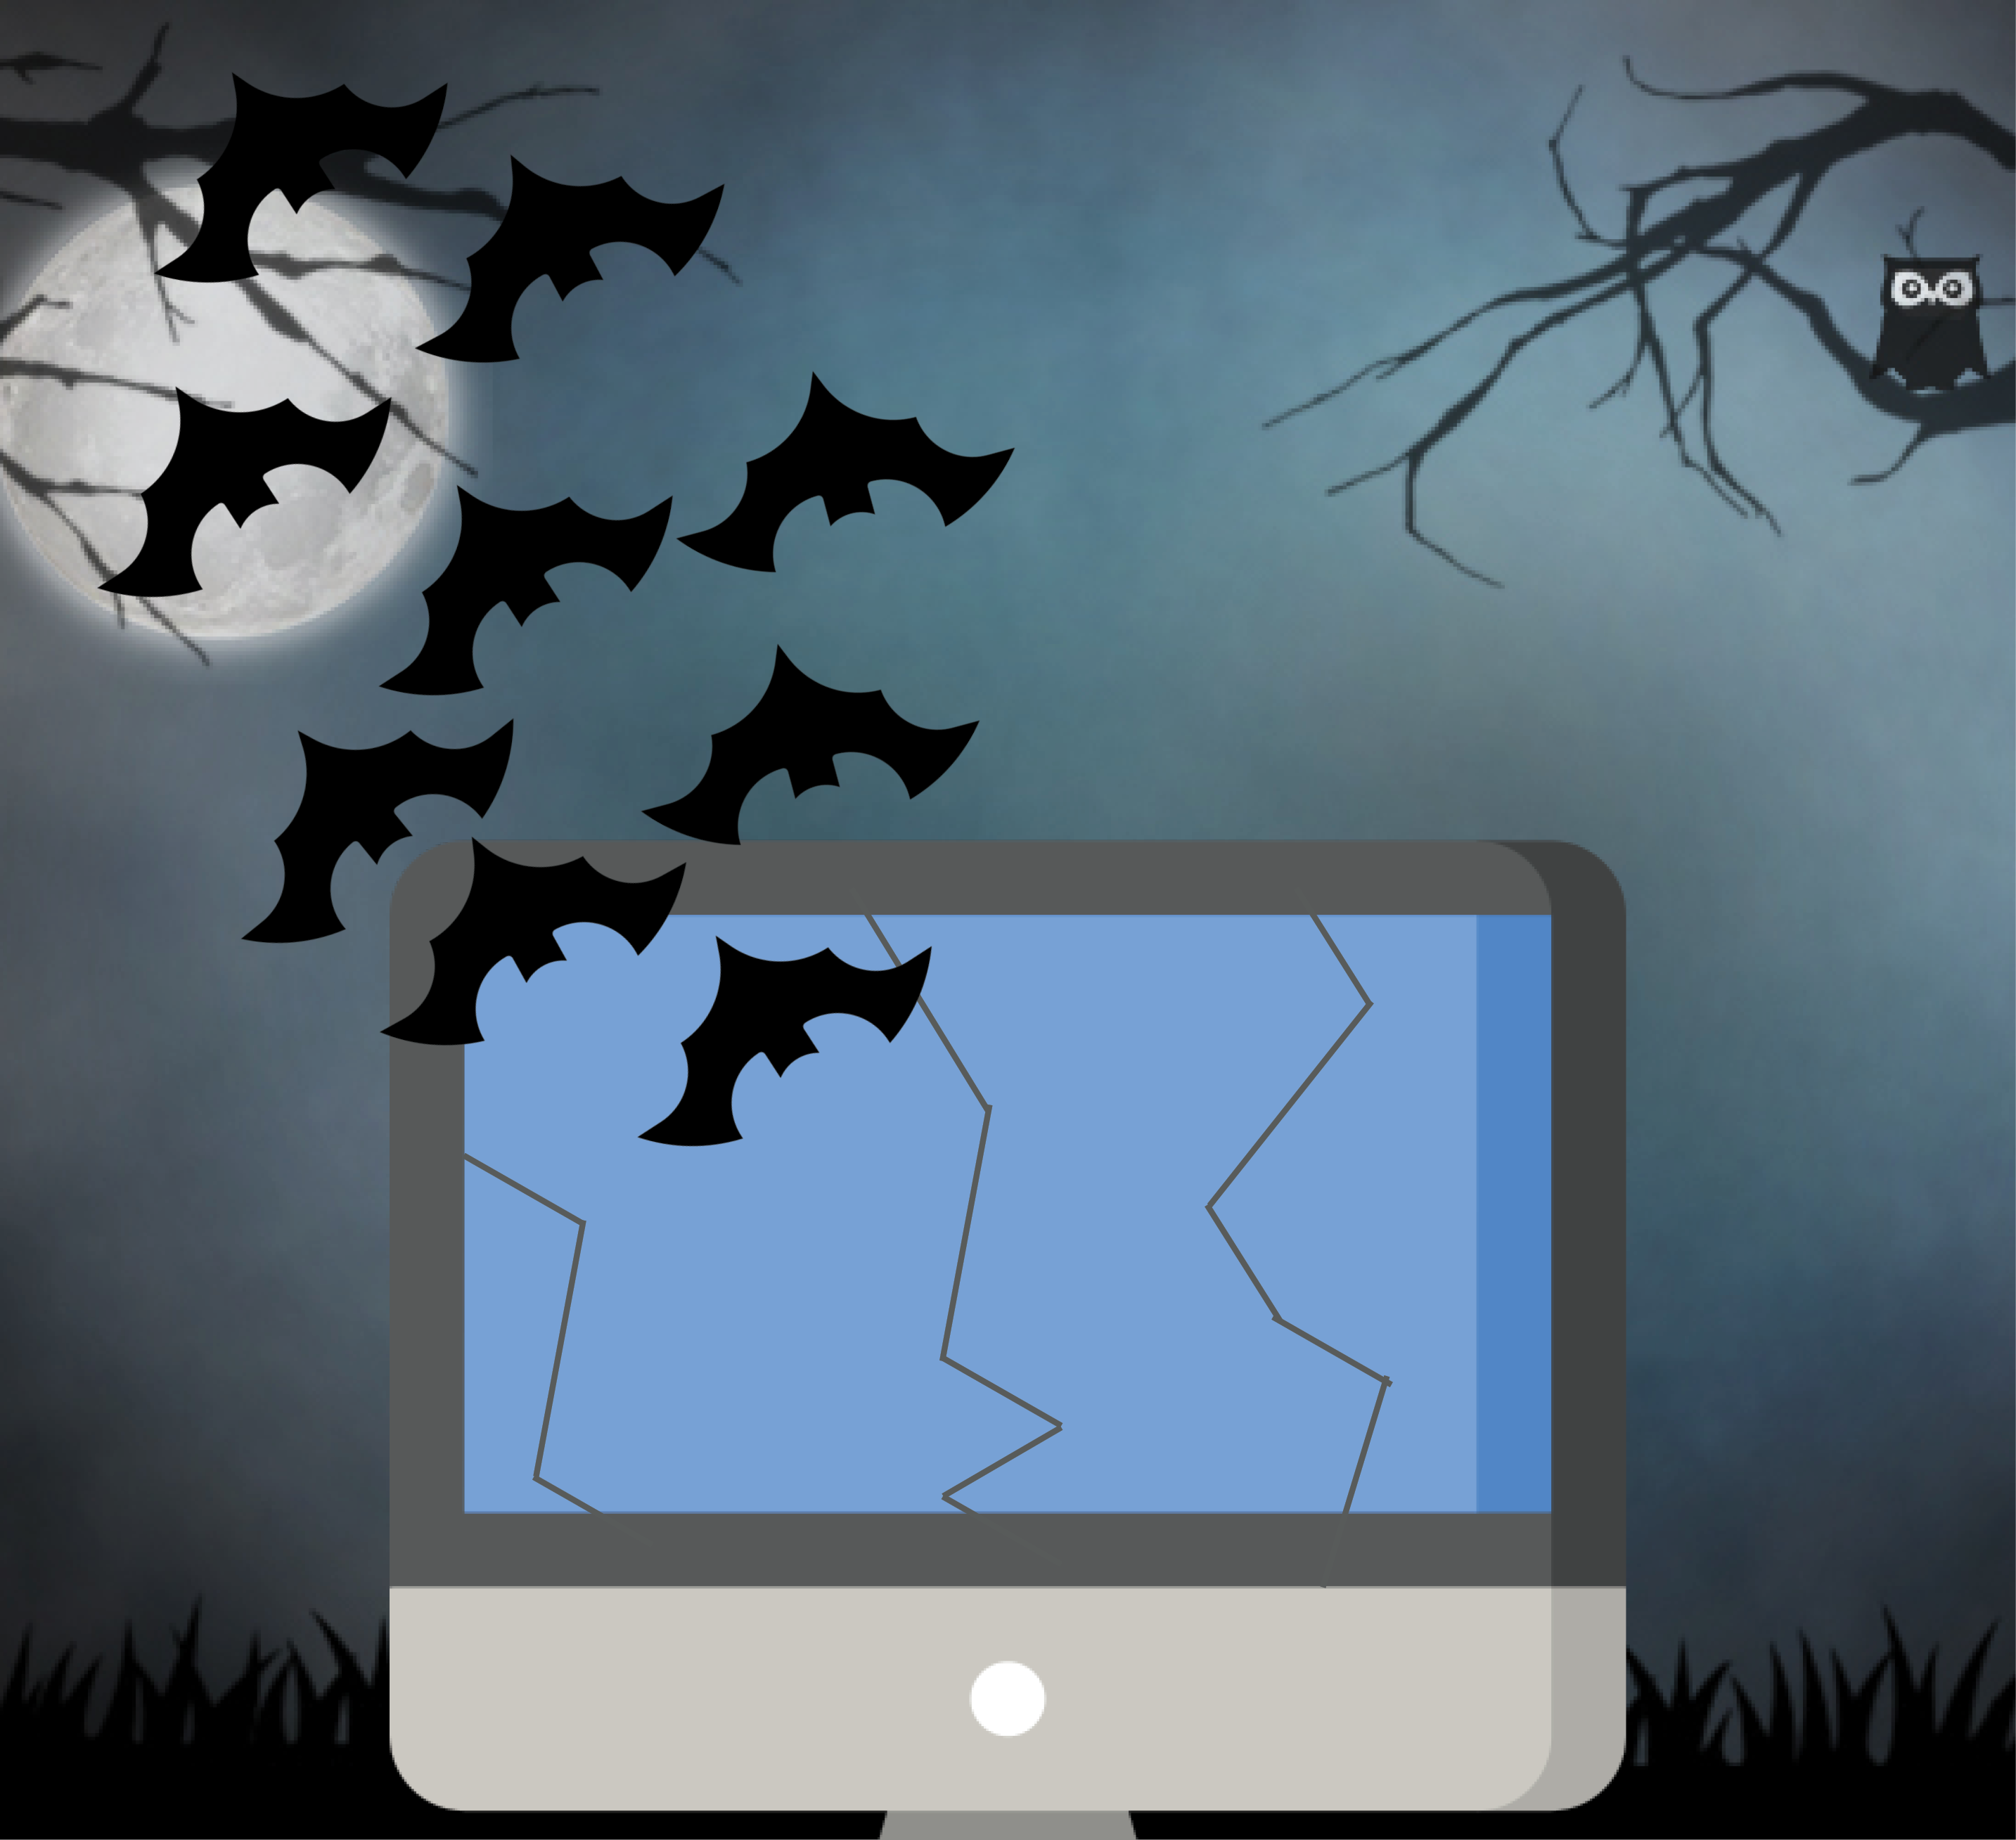 DDoS Attack Halloween Image